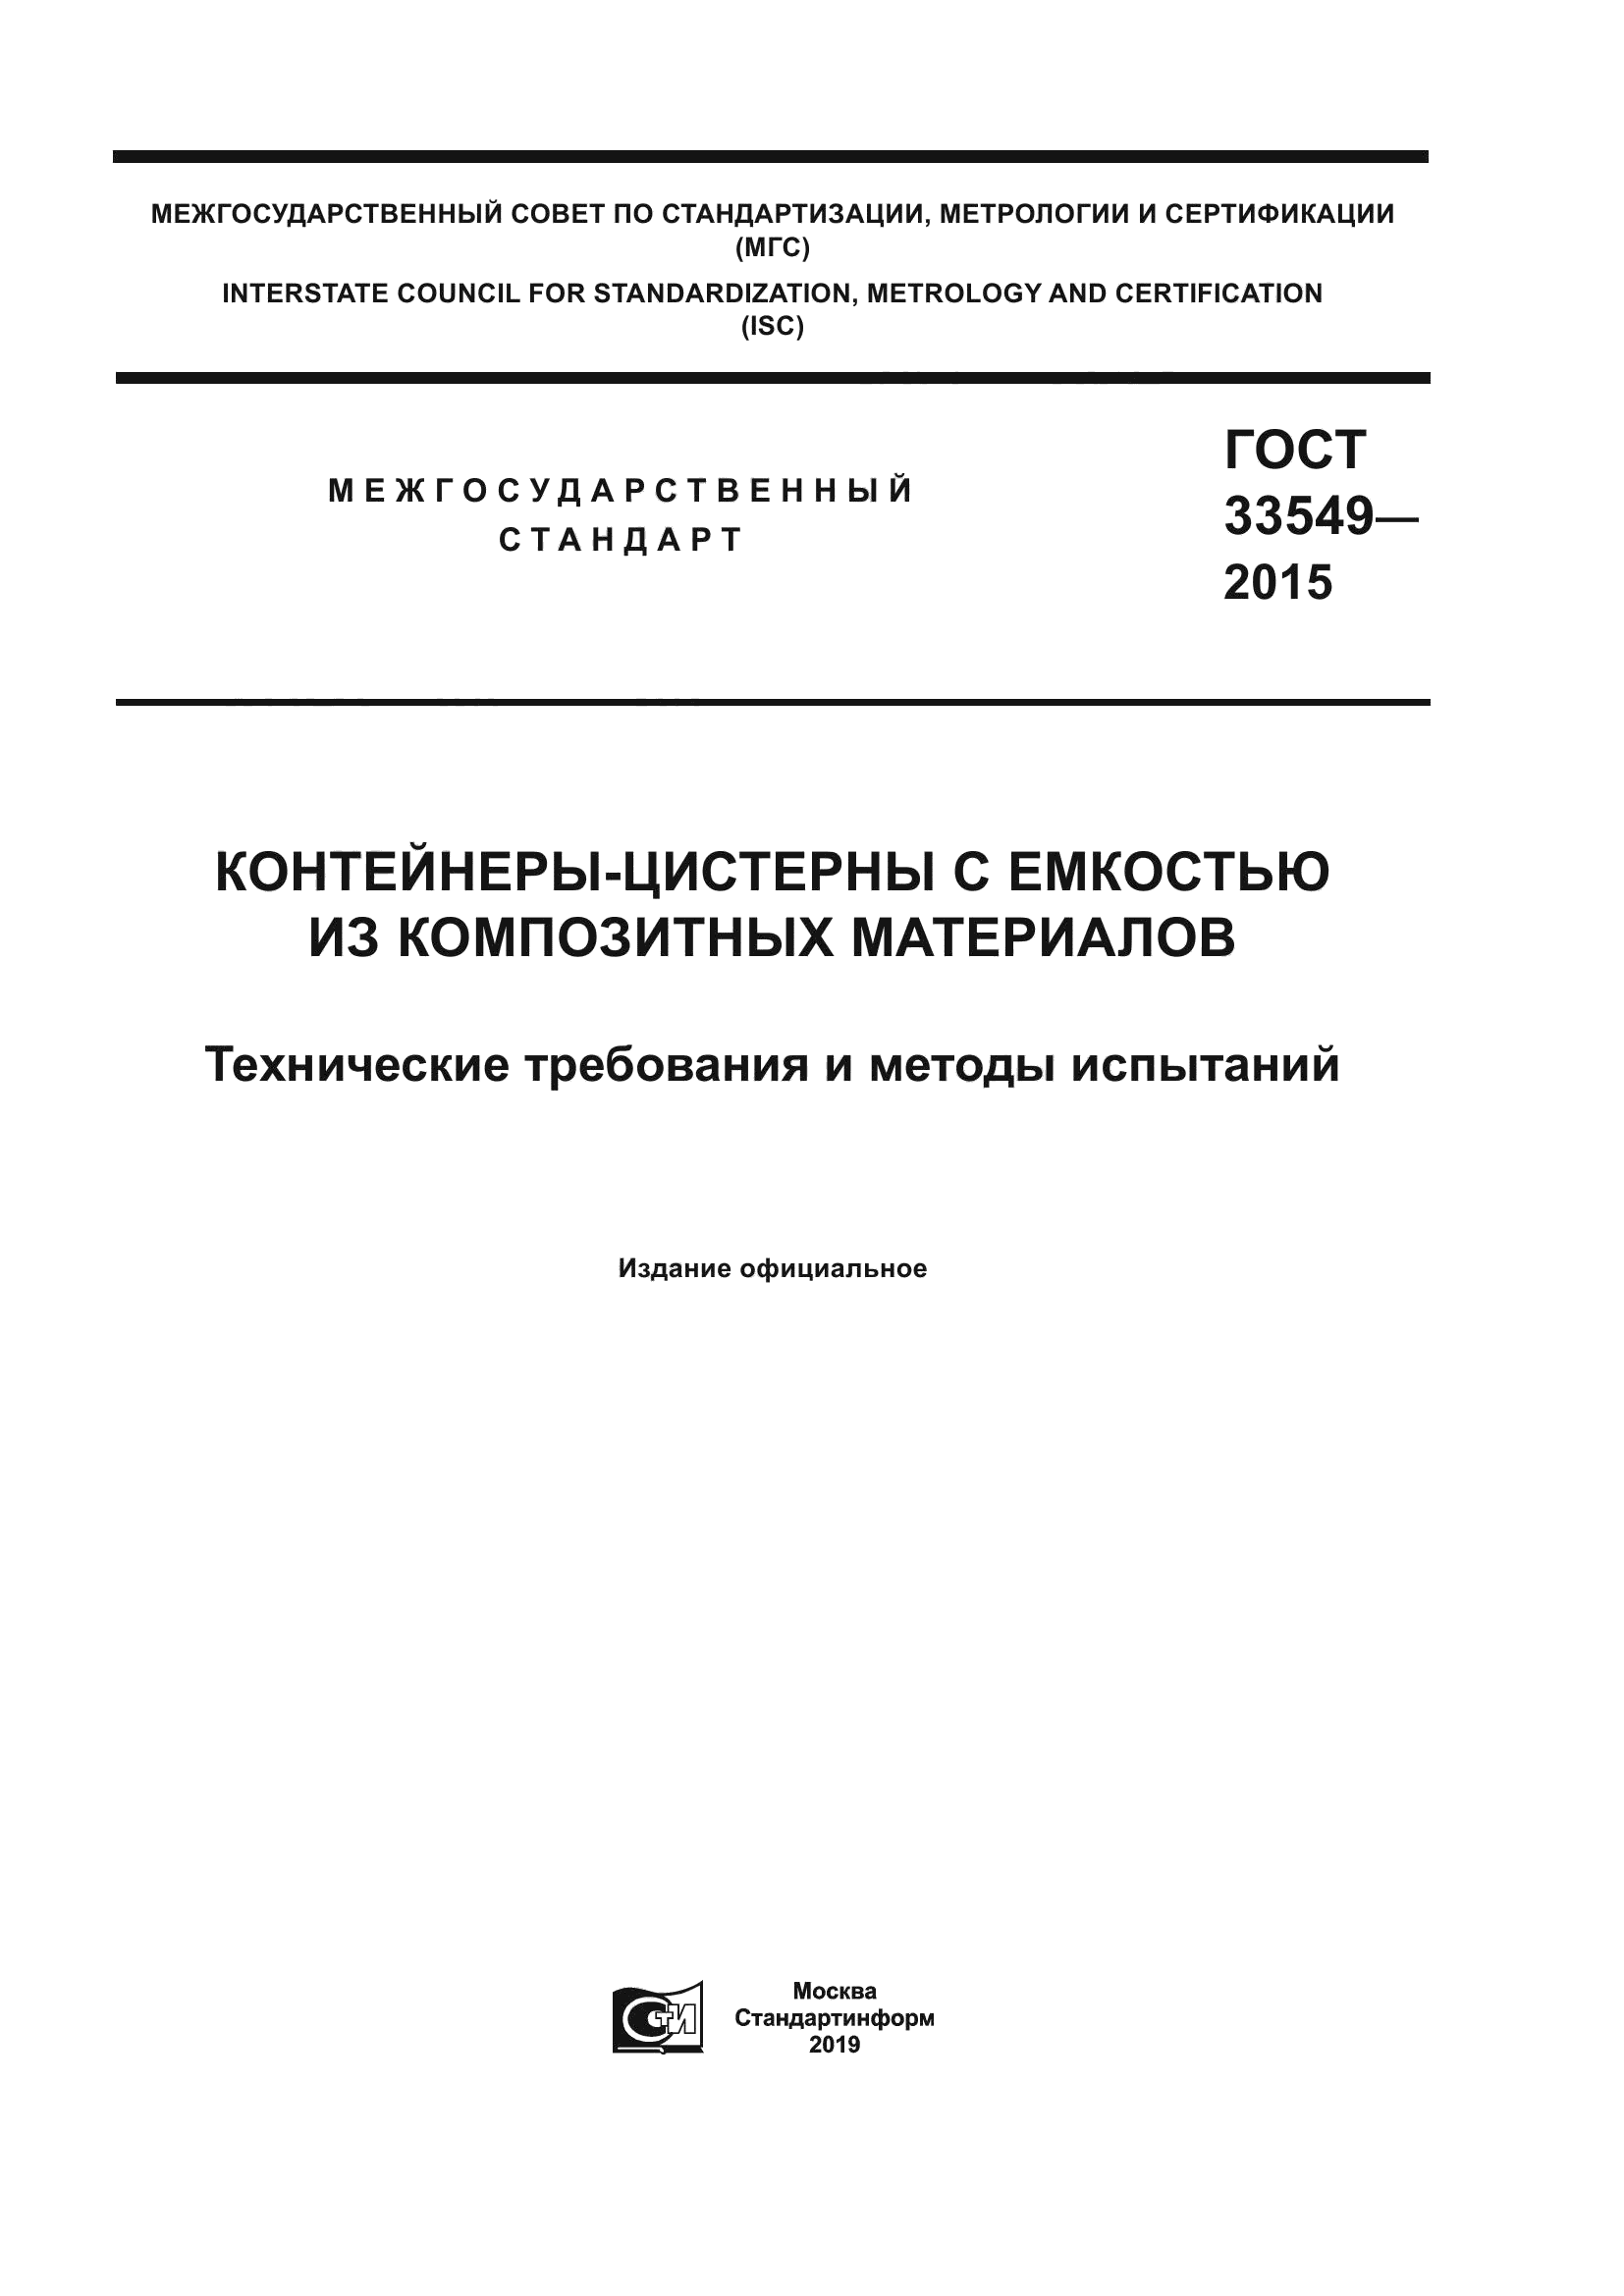 ГОСТ 33549-2015